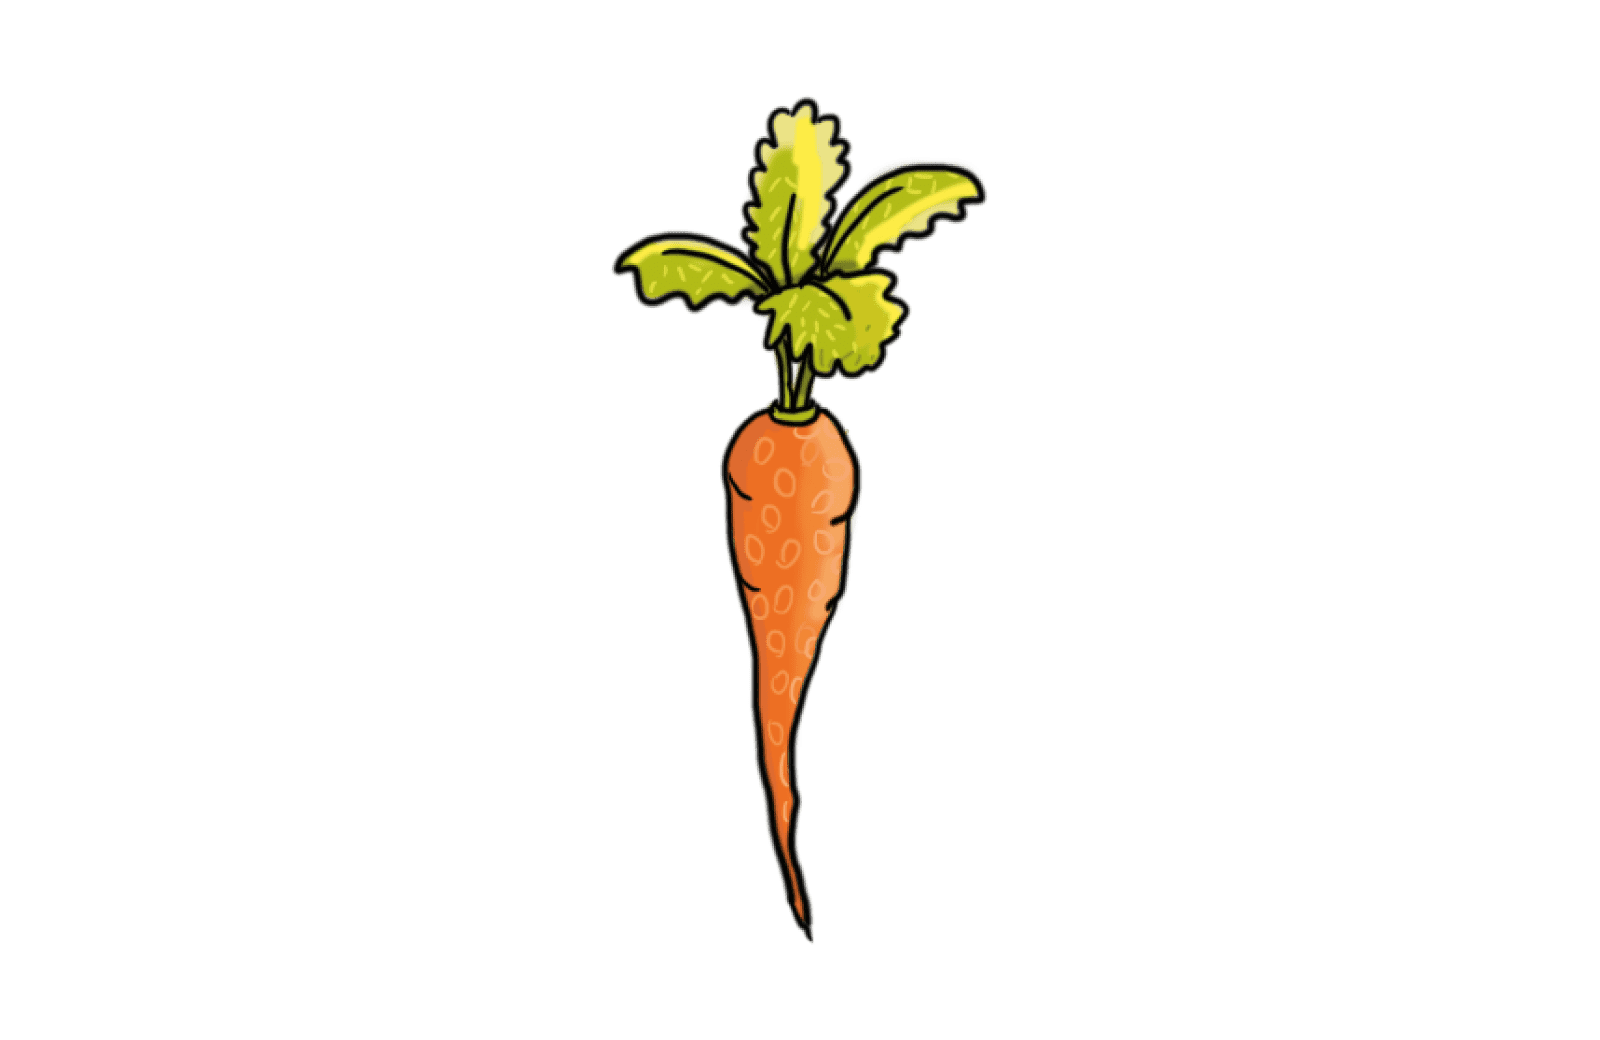 Lichtjesroute wortel